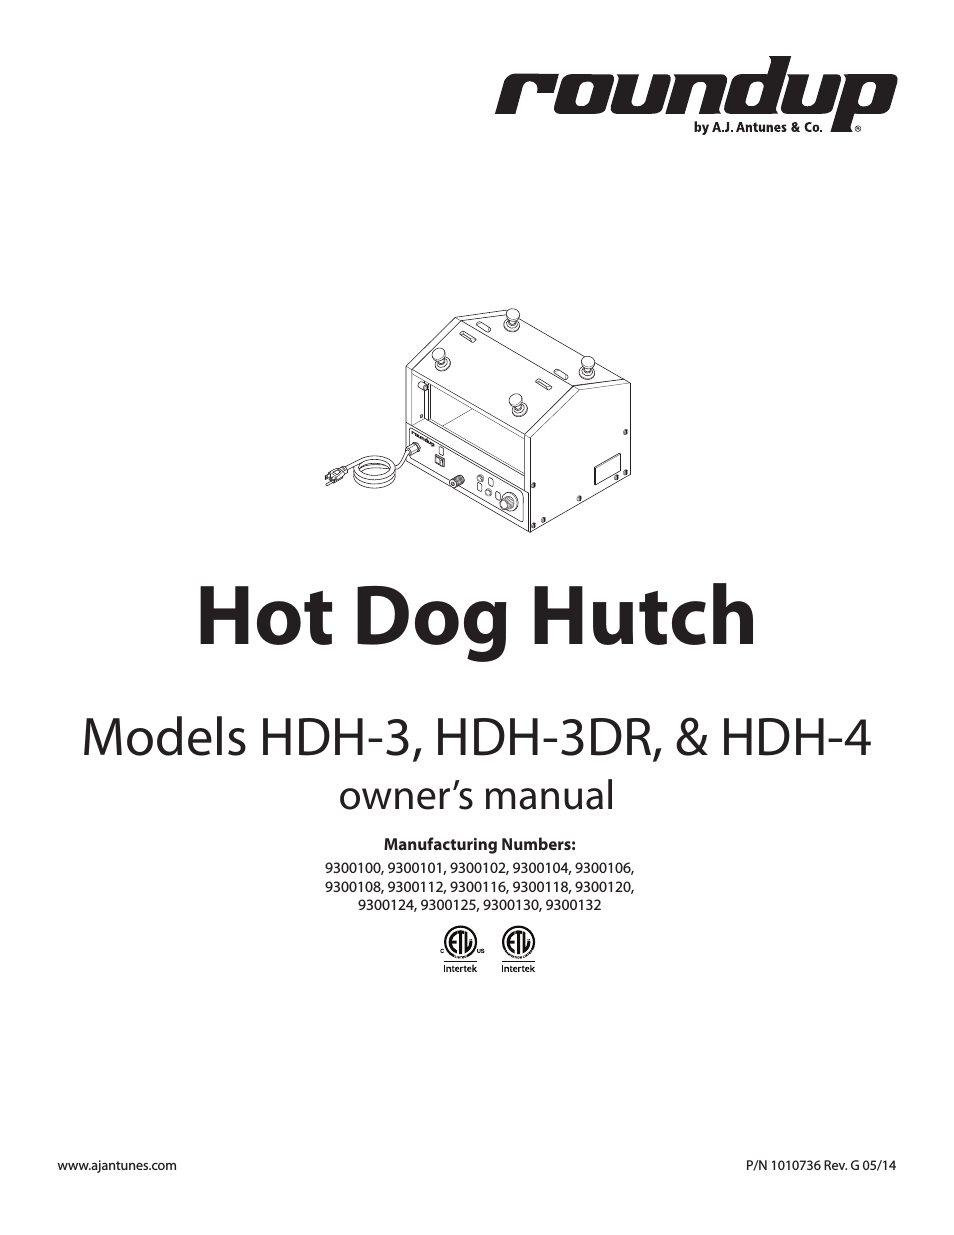 HDH-3DR 9300125